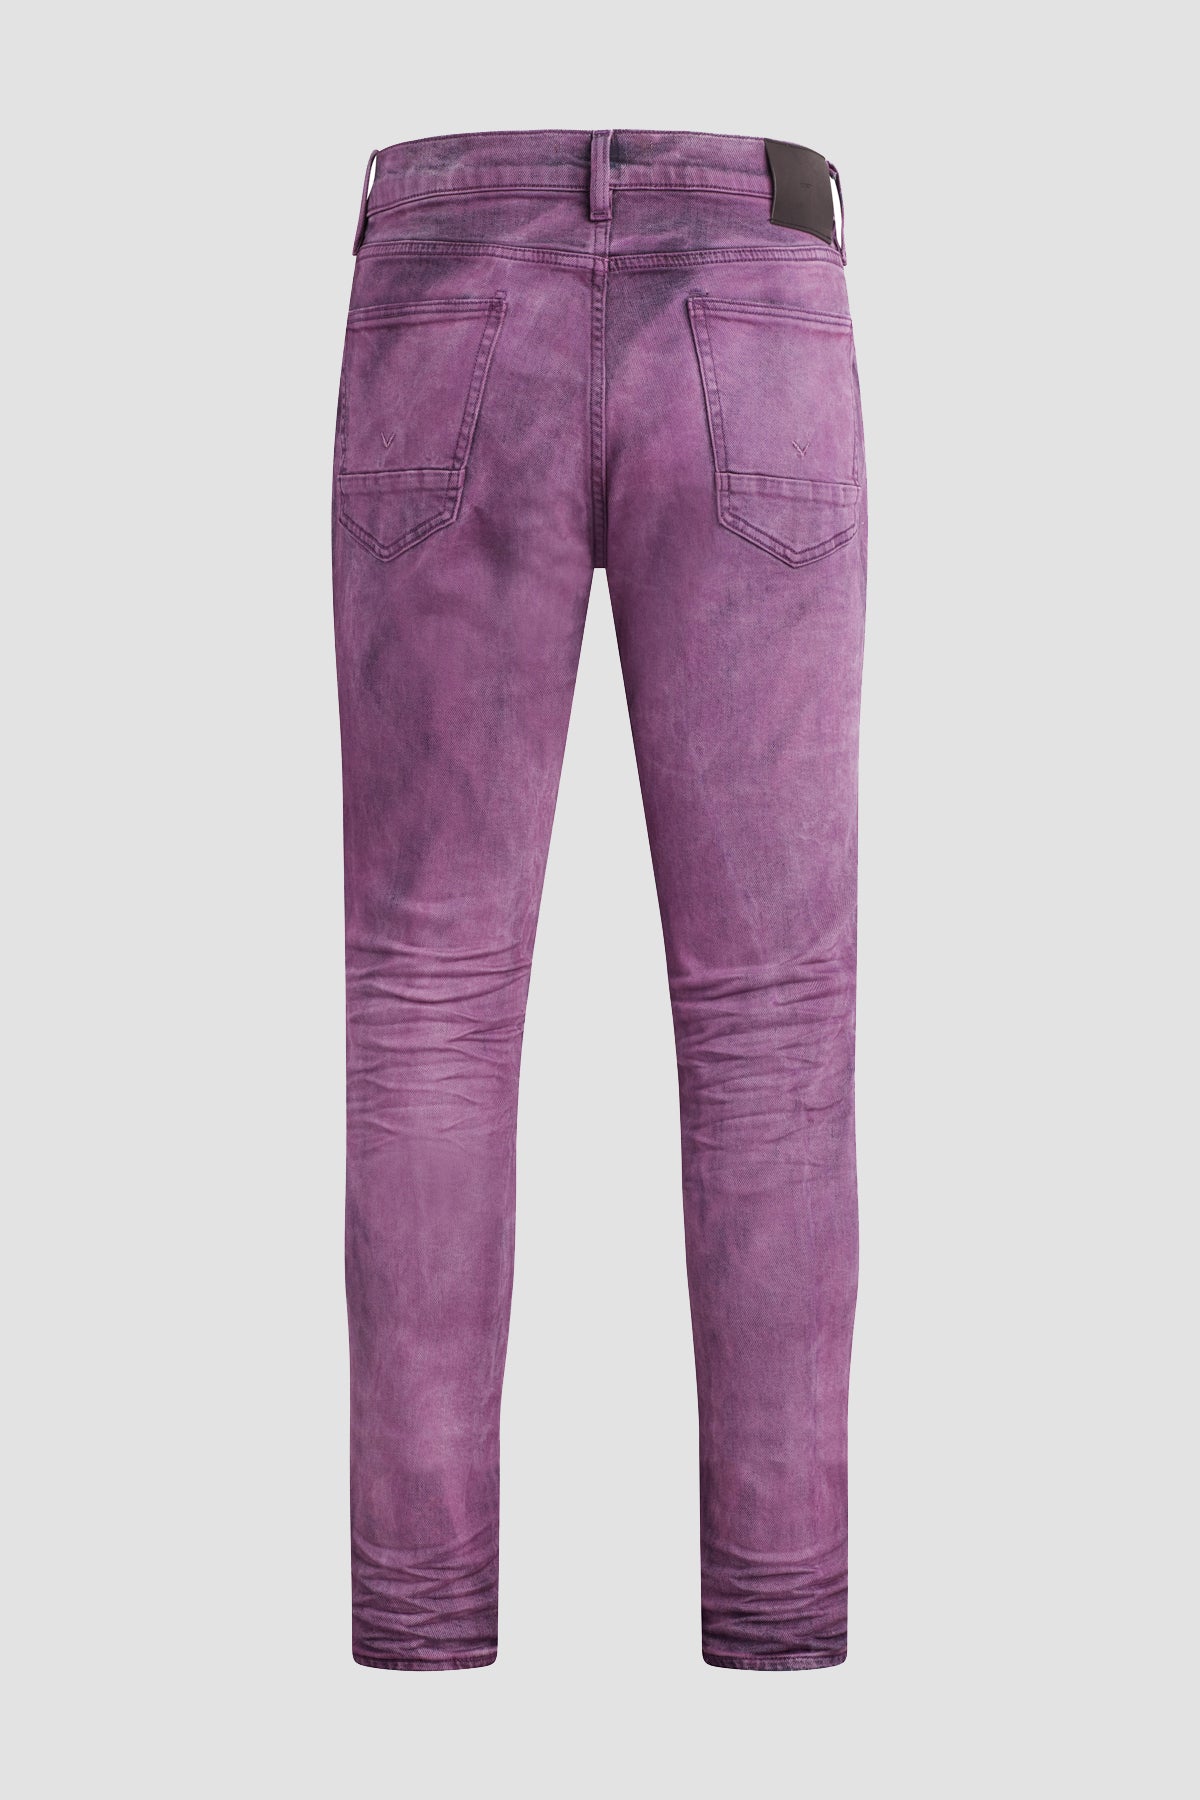 purple brand jeans size 36